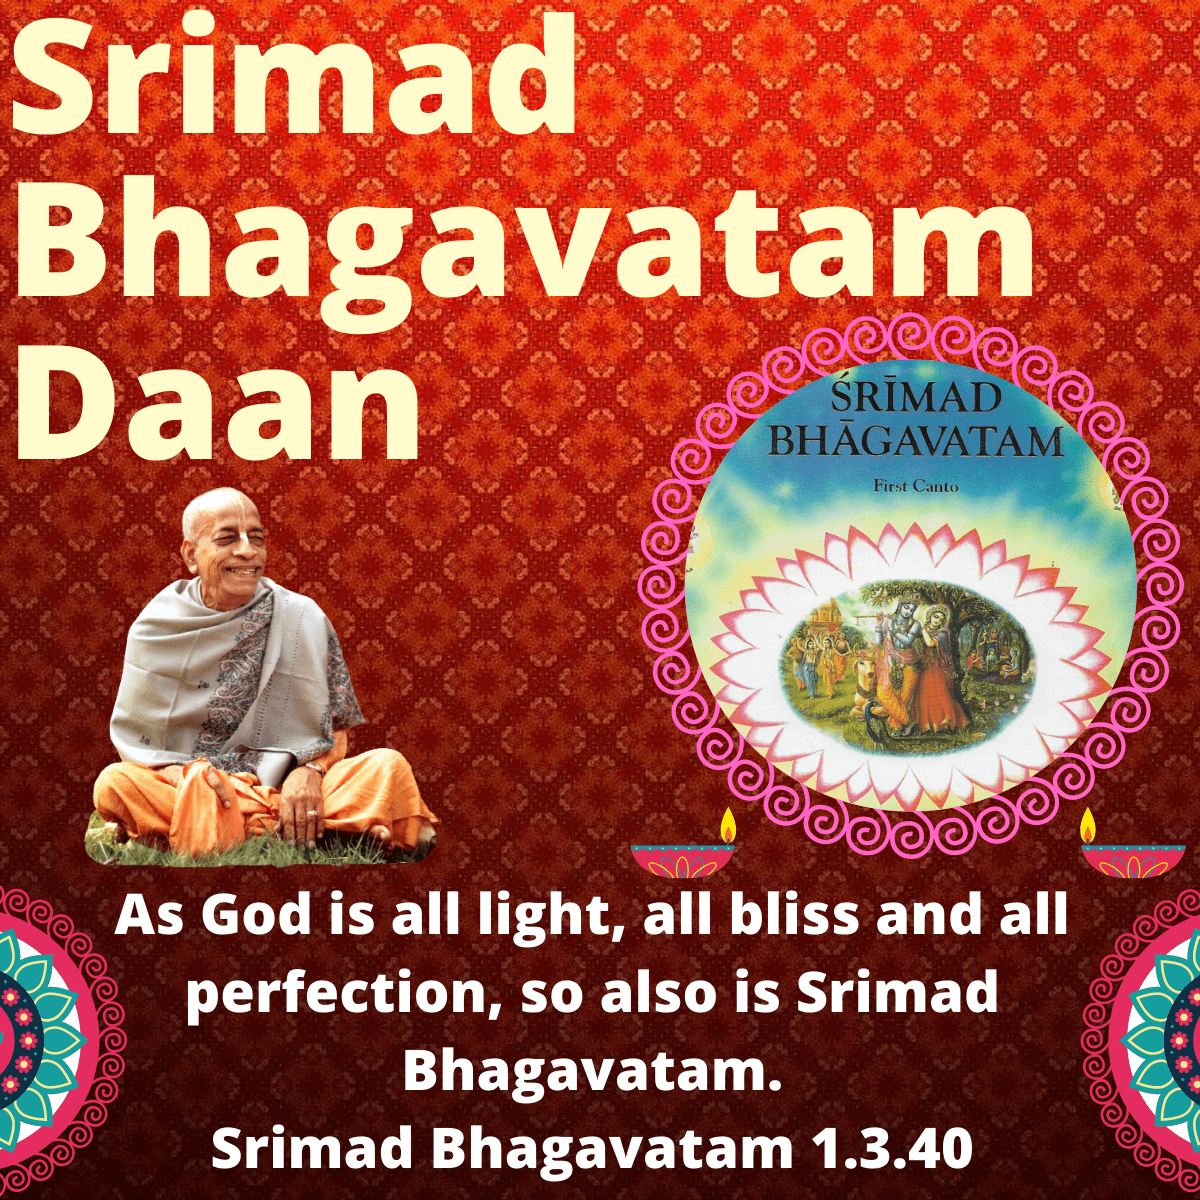 Give Srimad Bhagavatam